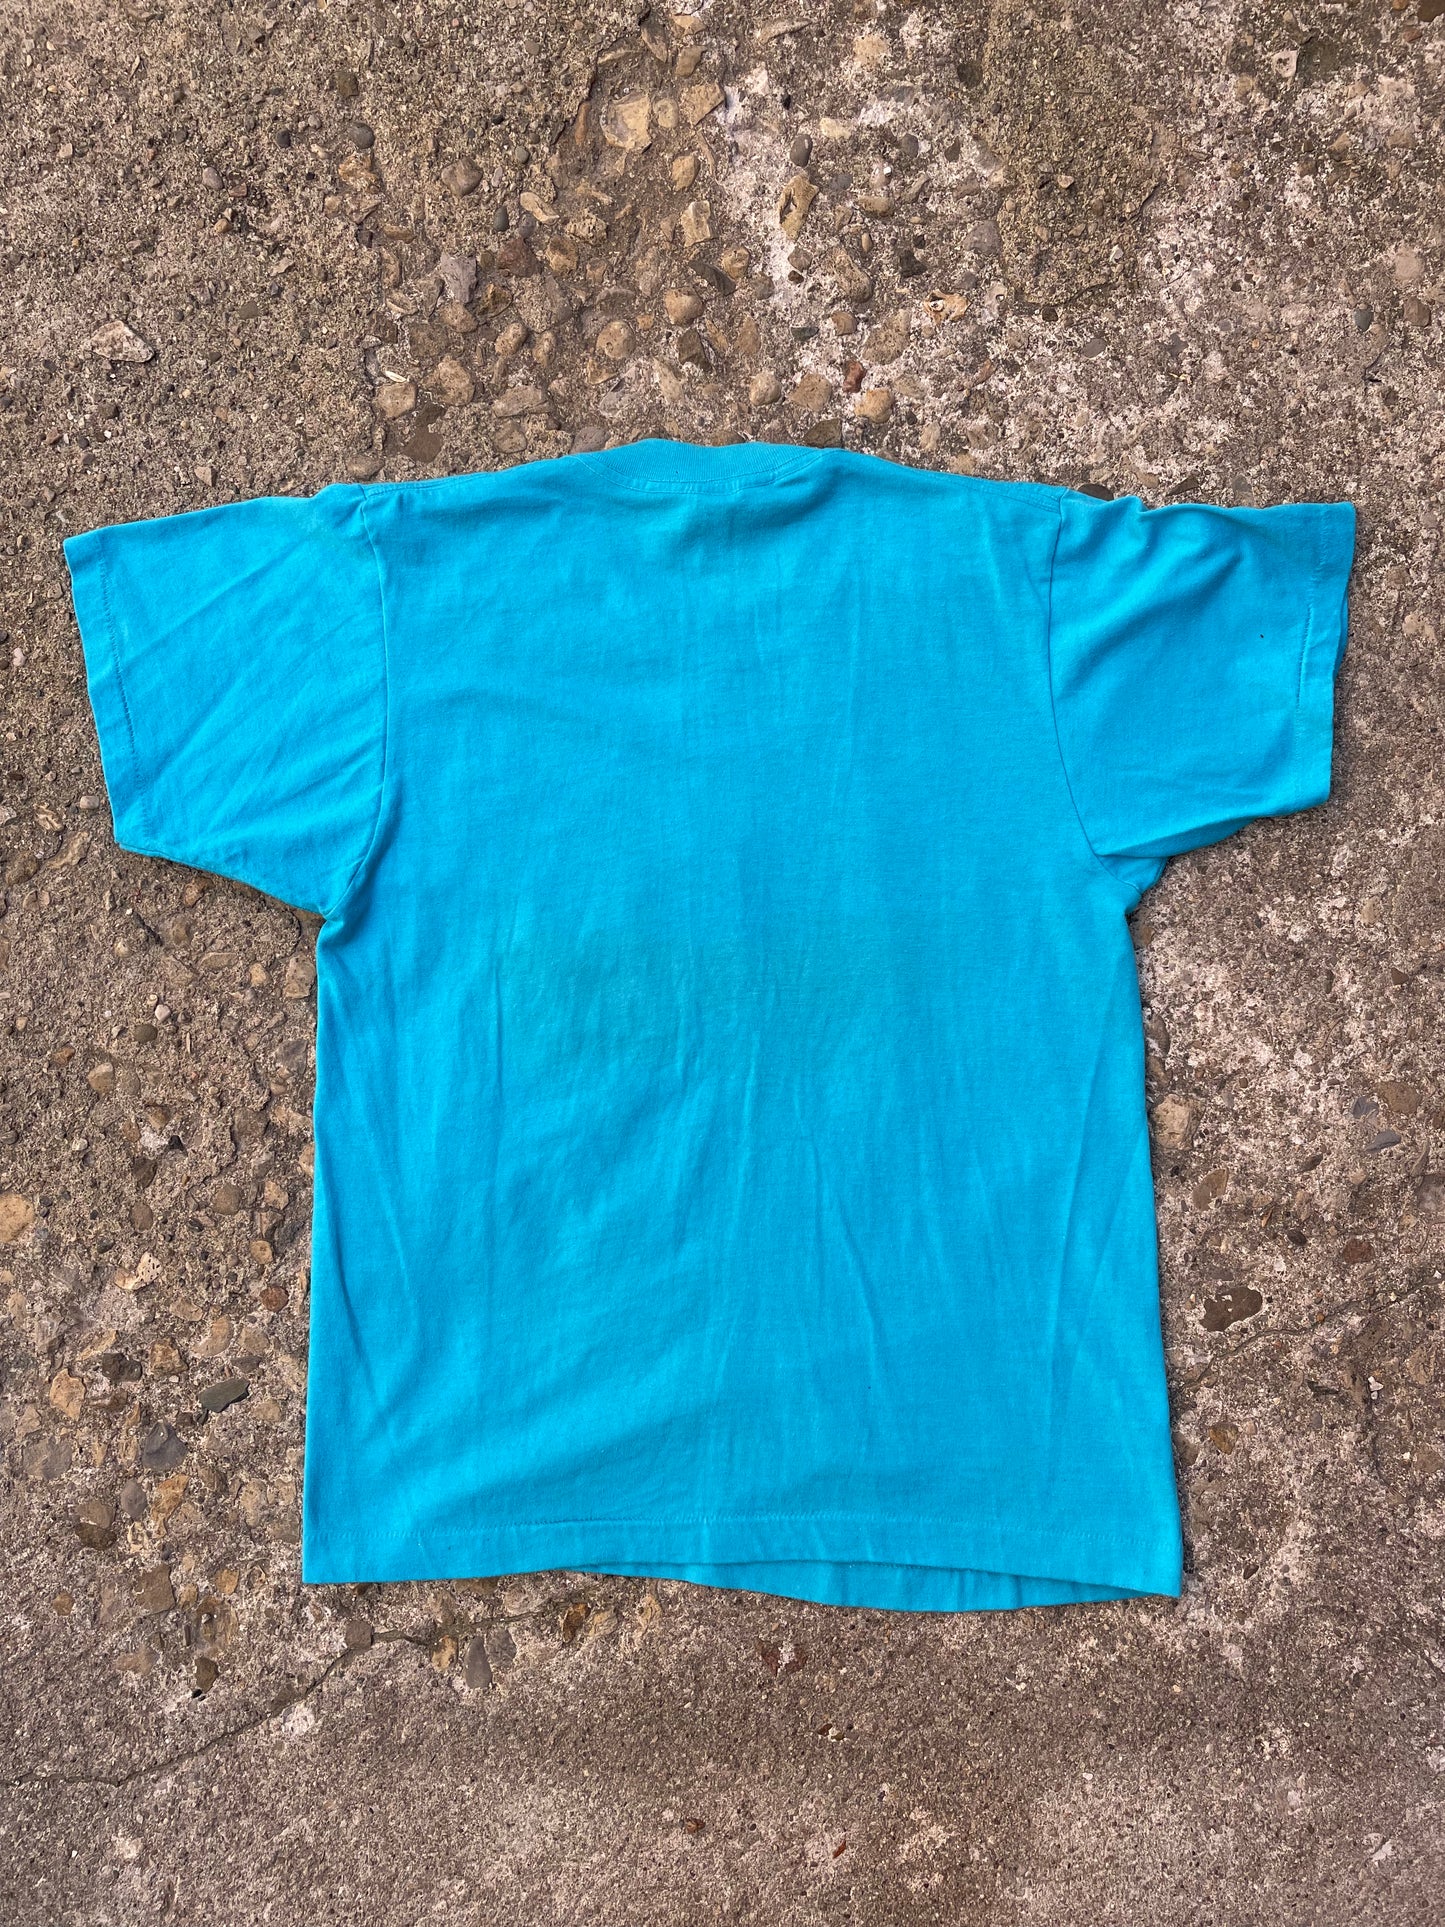 1980's Bahamas Tourist Graphic T-Shirt - M